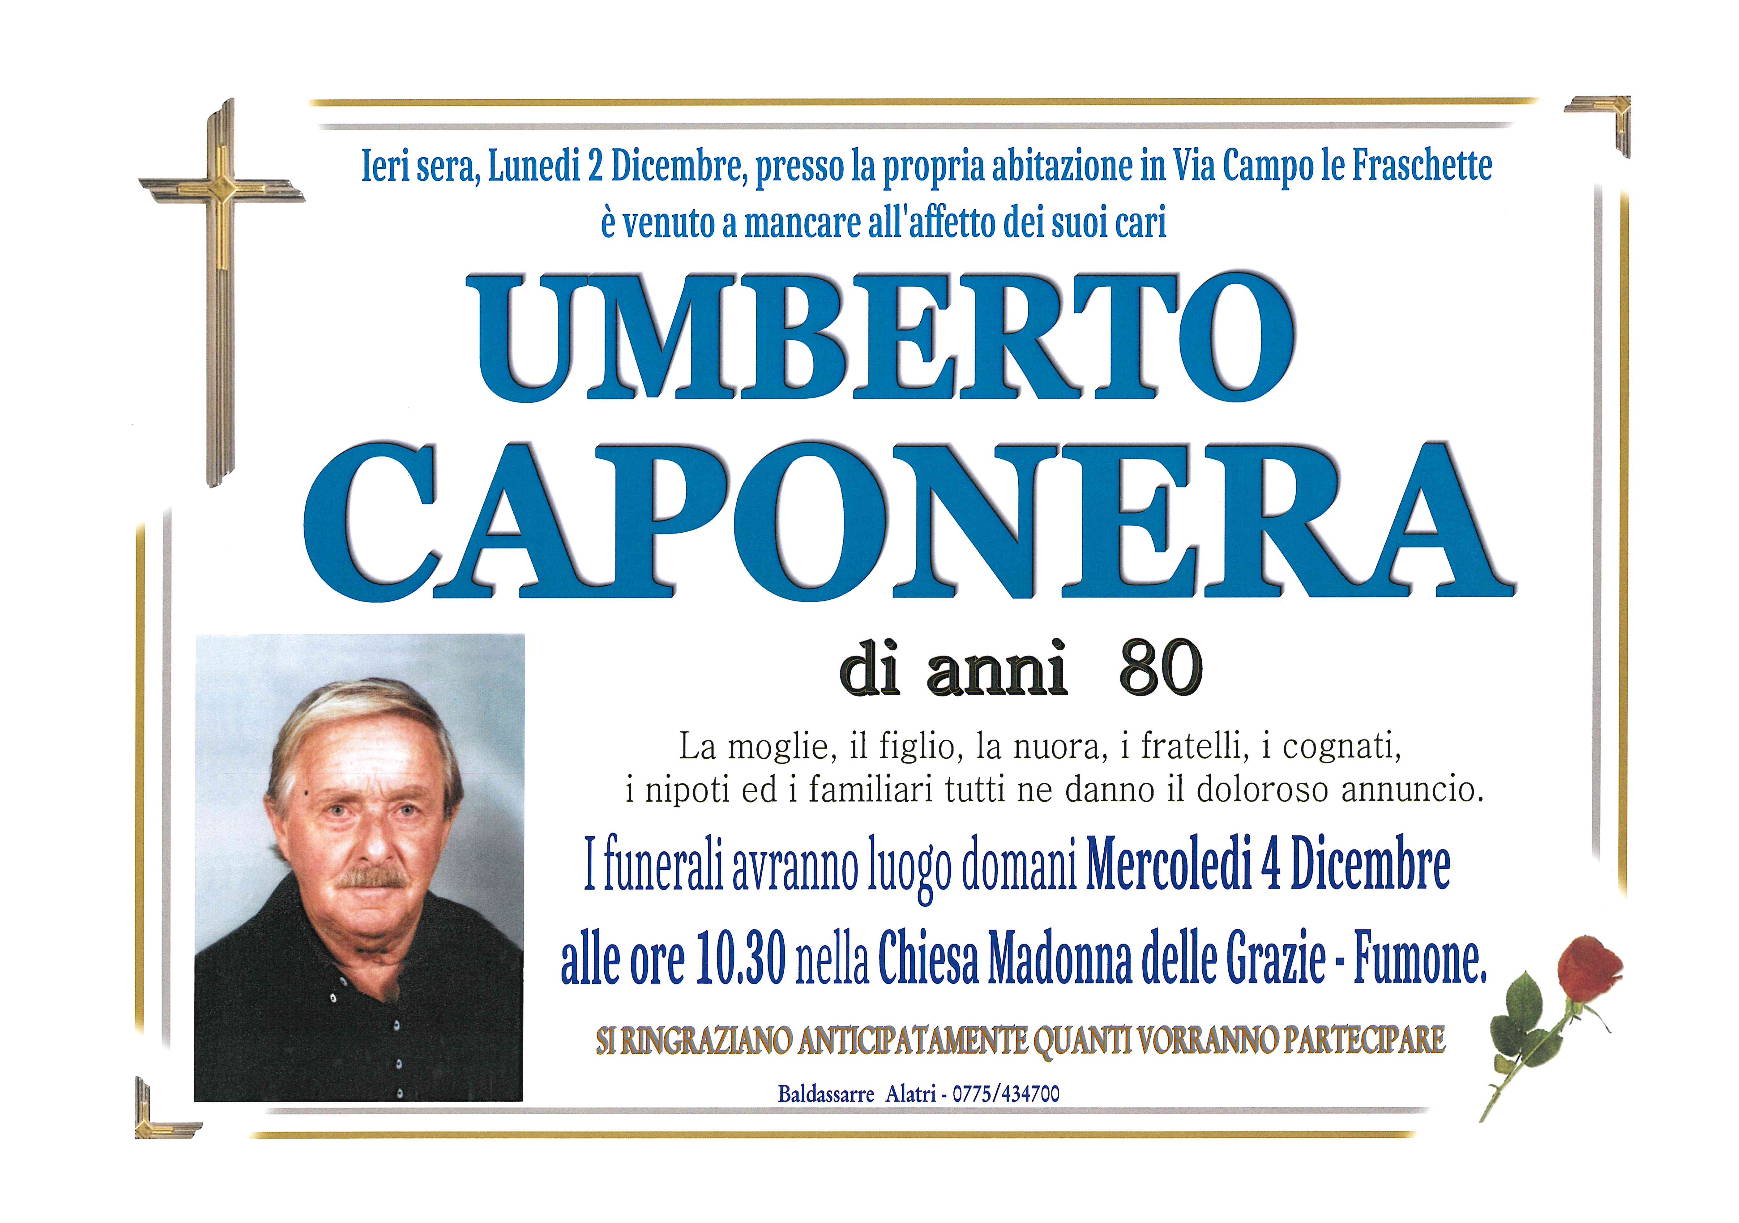 Umberto Caponera